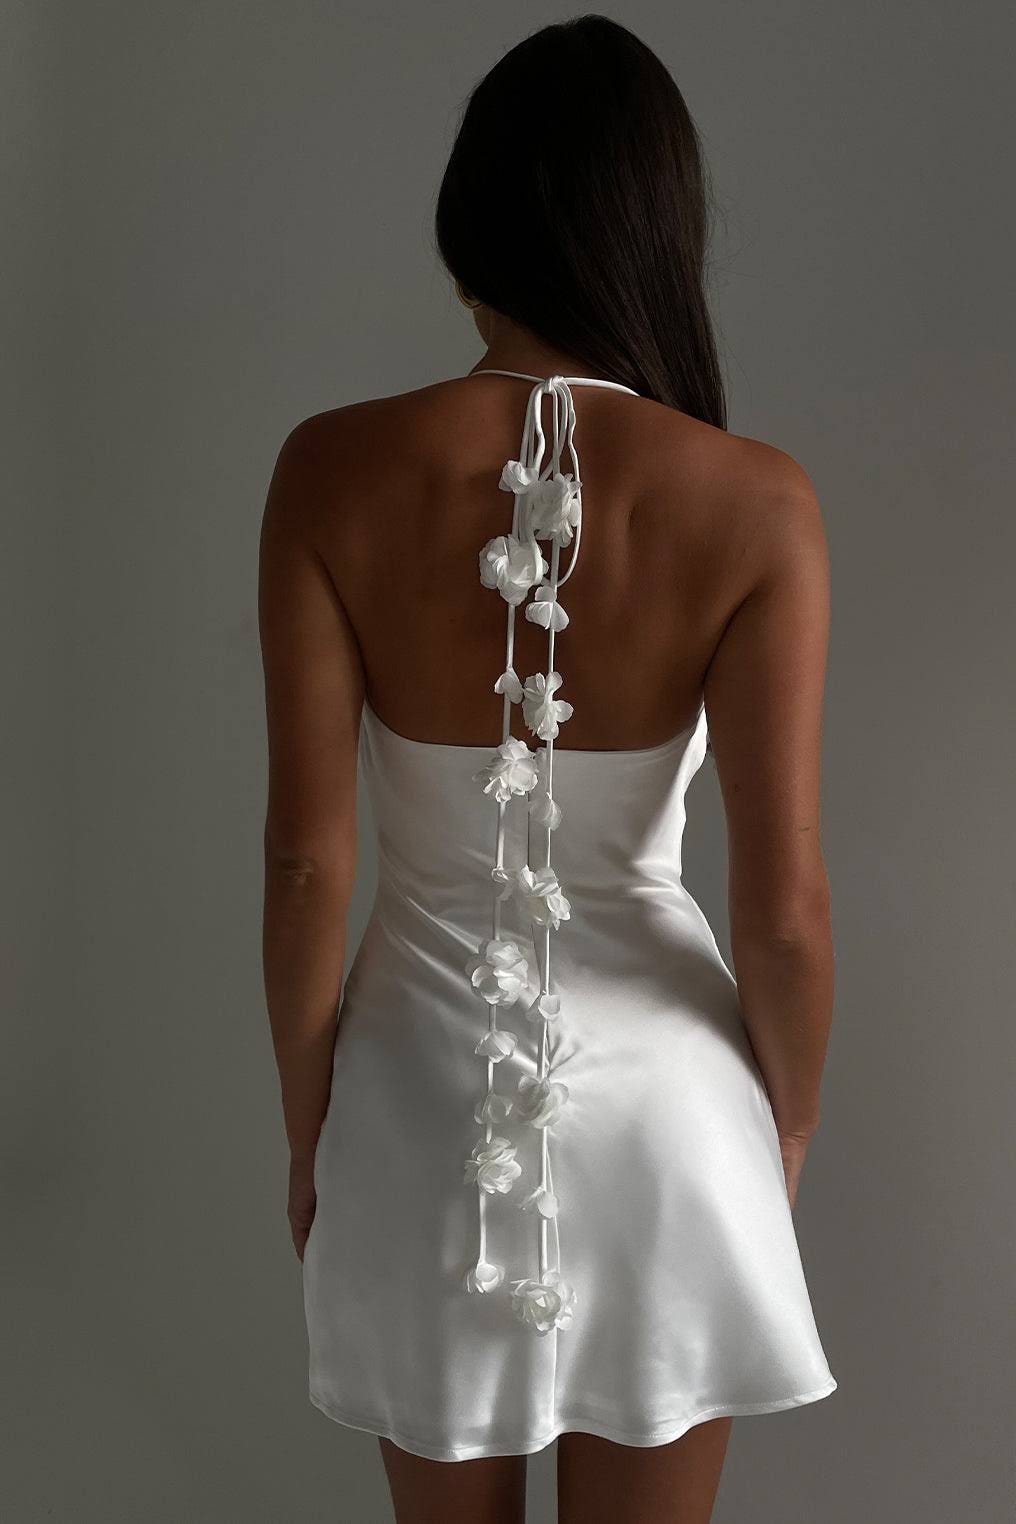 Stylish White Graduation Dress Mini with Halter Tie and Detachable Flower | Image